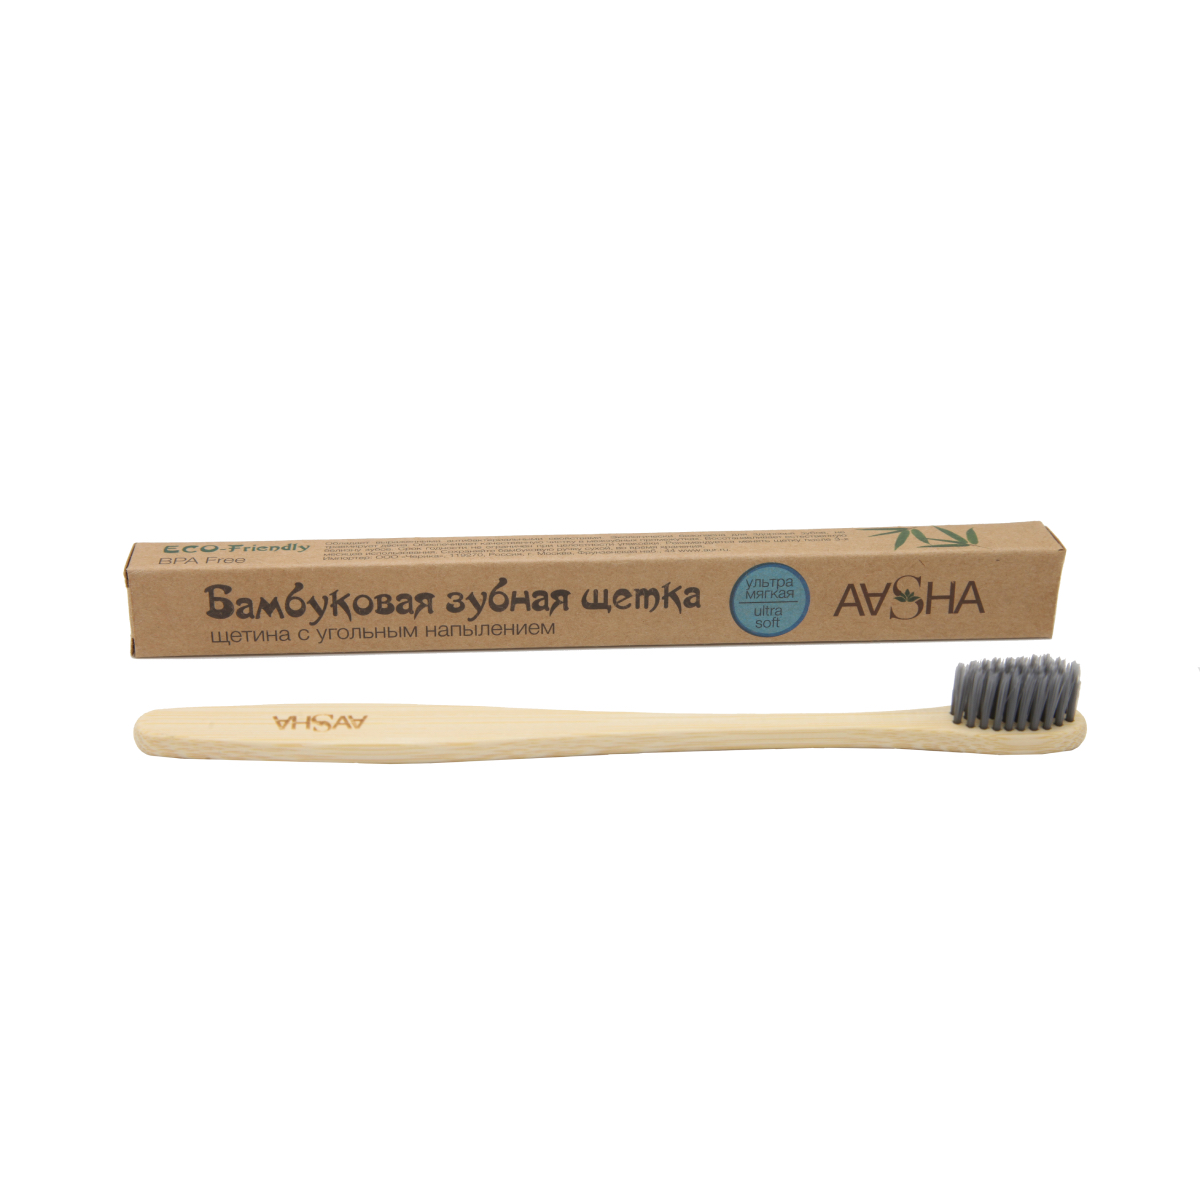 Бамбуковая зубная щетка Aasha с угольным напылением ULTRA SOFT (Ультра мягкая), 1 шт. бамбуковая зубная щетка aasha с угольным напылением ultra soft ультра мягкая 1 шт